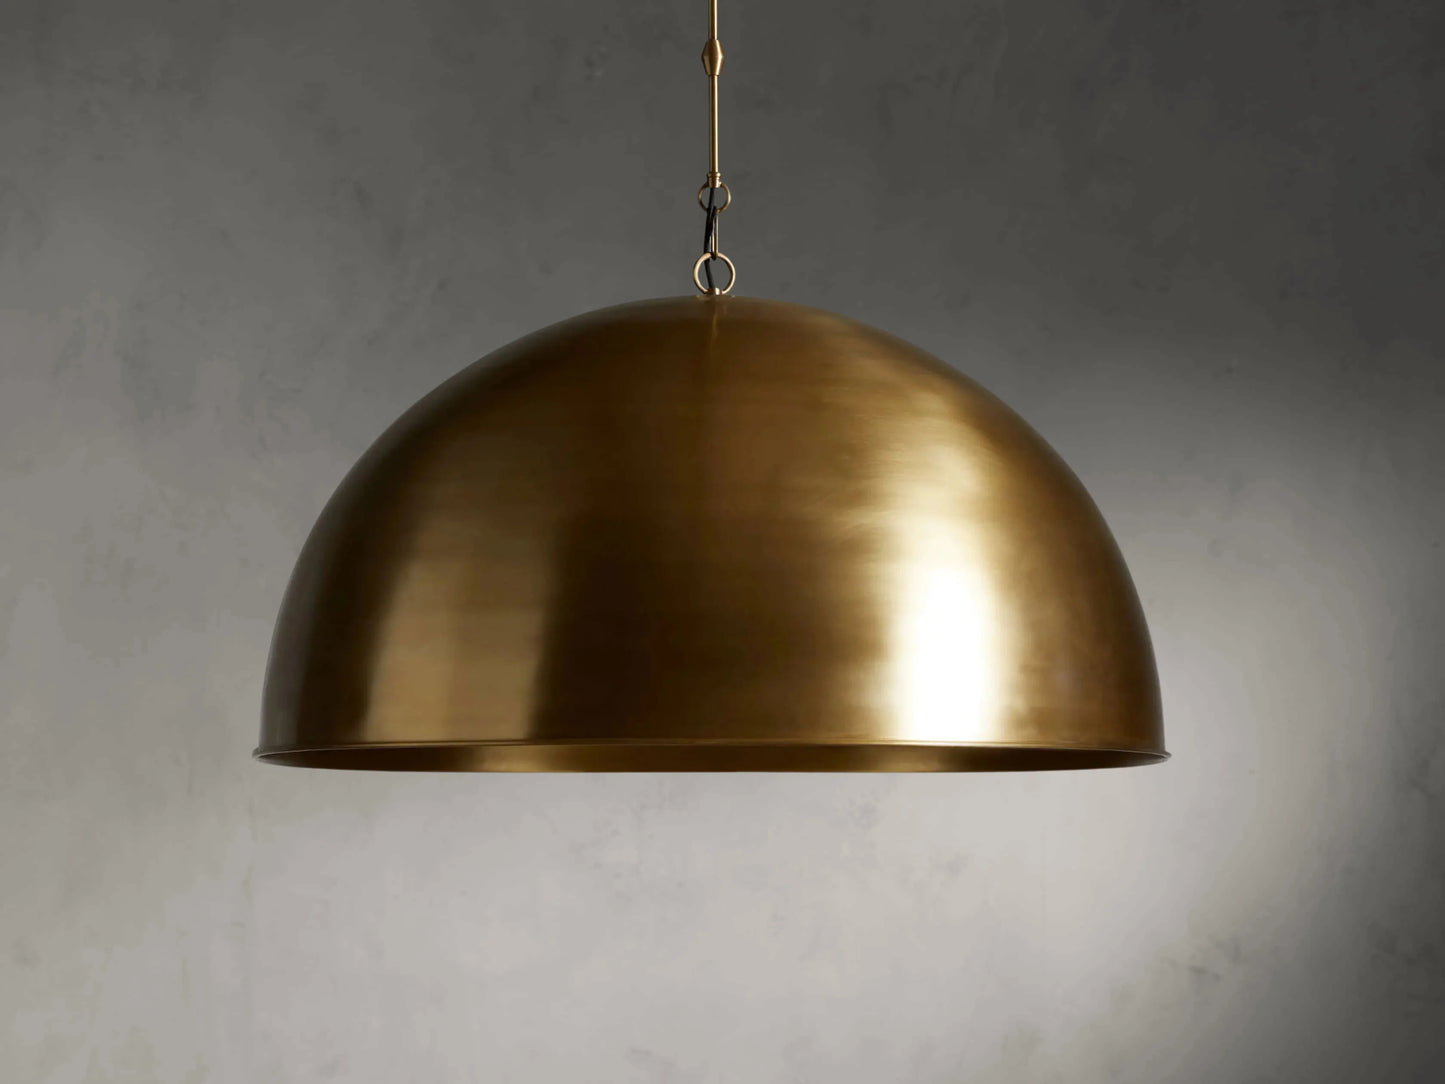 Brass Dome Pendant Light